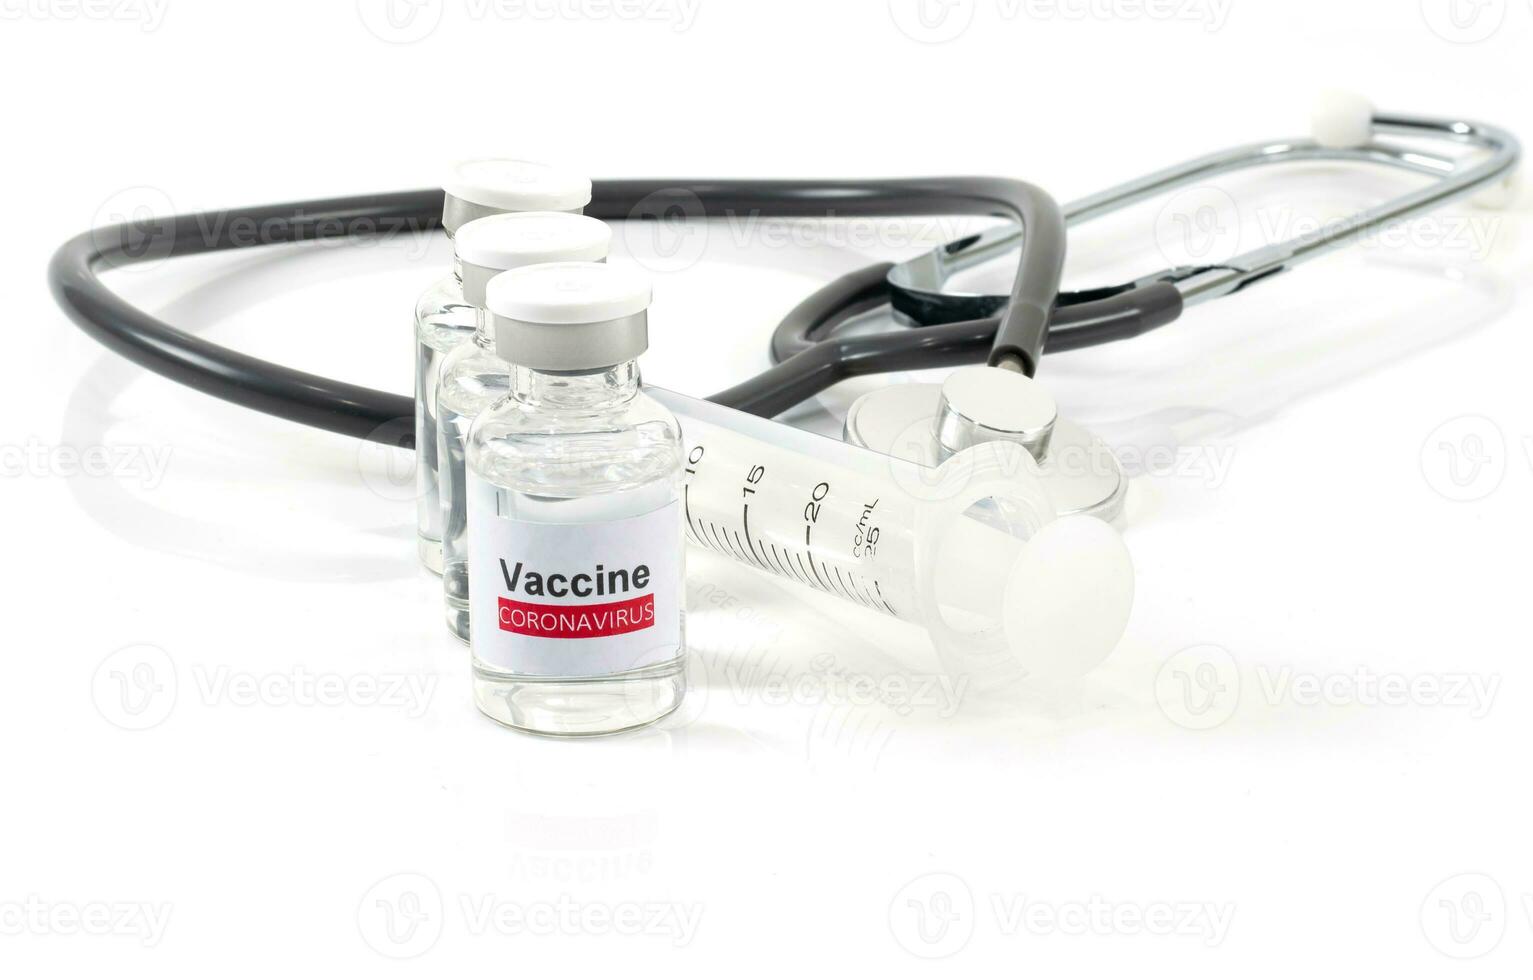 vaccino coronavirus bottiglia e medico siringa su un' bianca sfondo foto